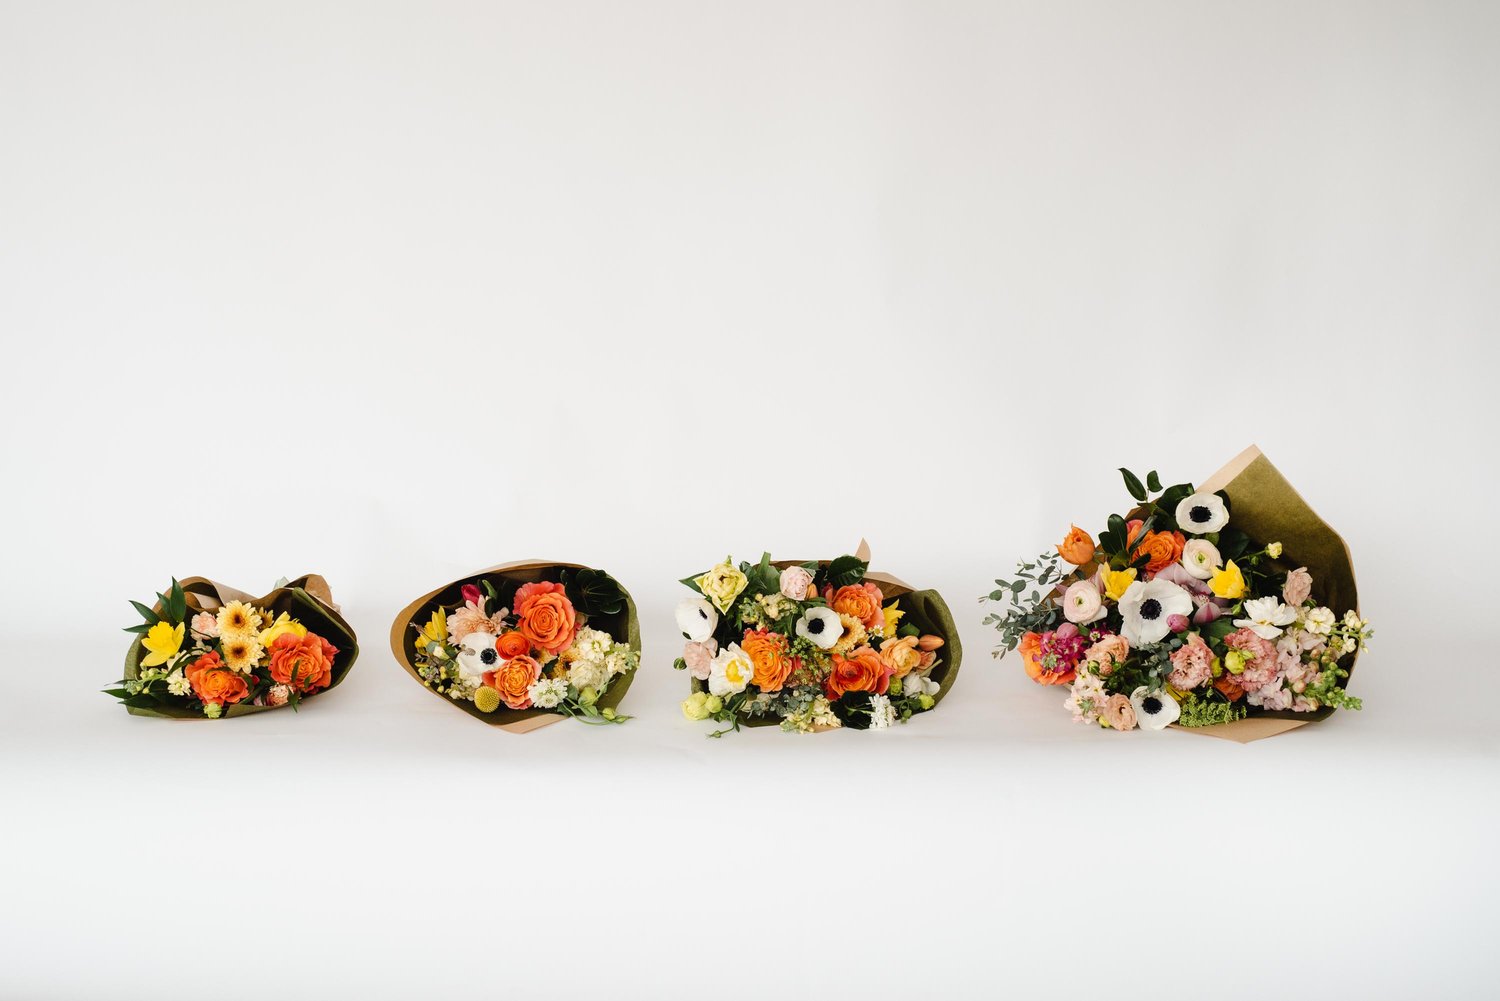 Paper Wrapped Bouquets - Desiner's Choice Orlando Florist